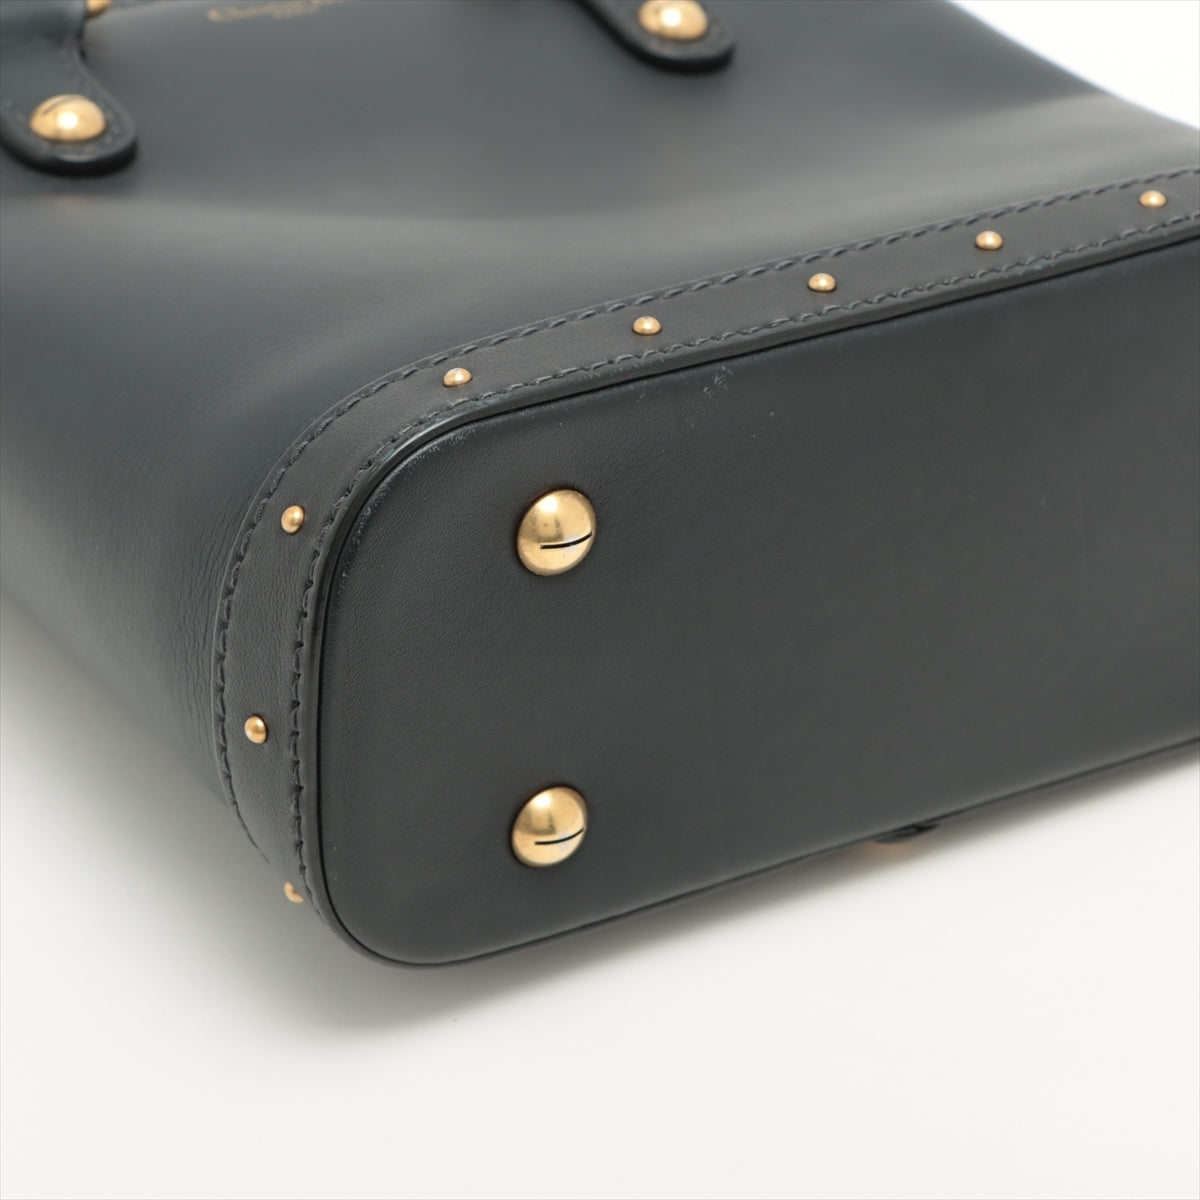 Christian Dior Leather 2way handbag Black